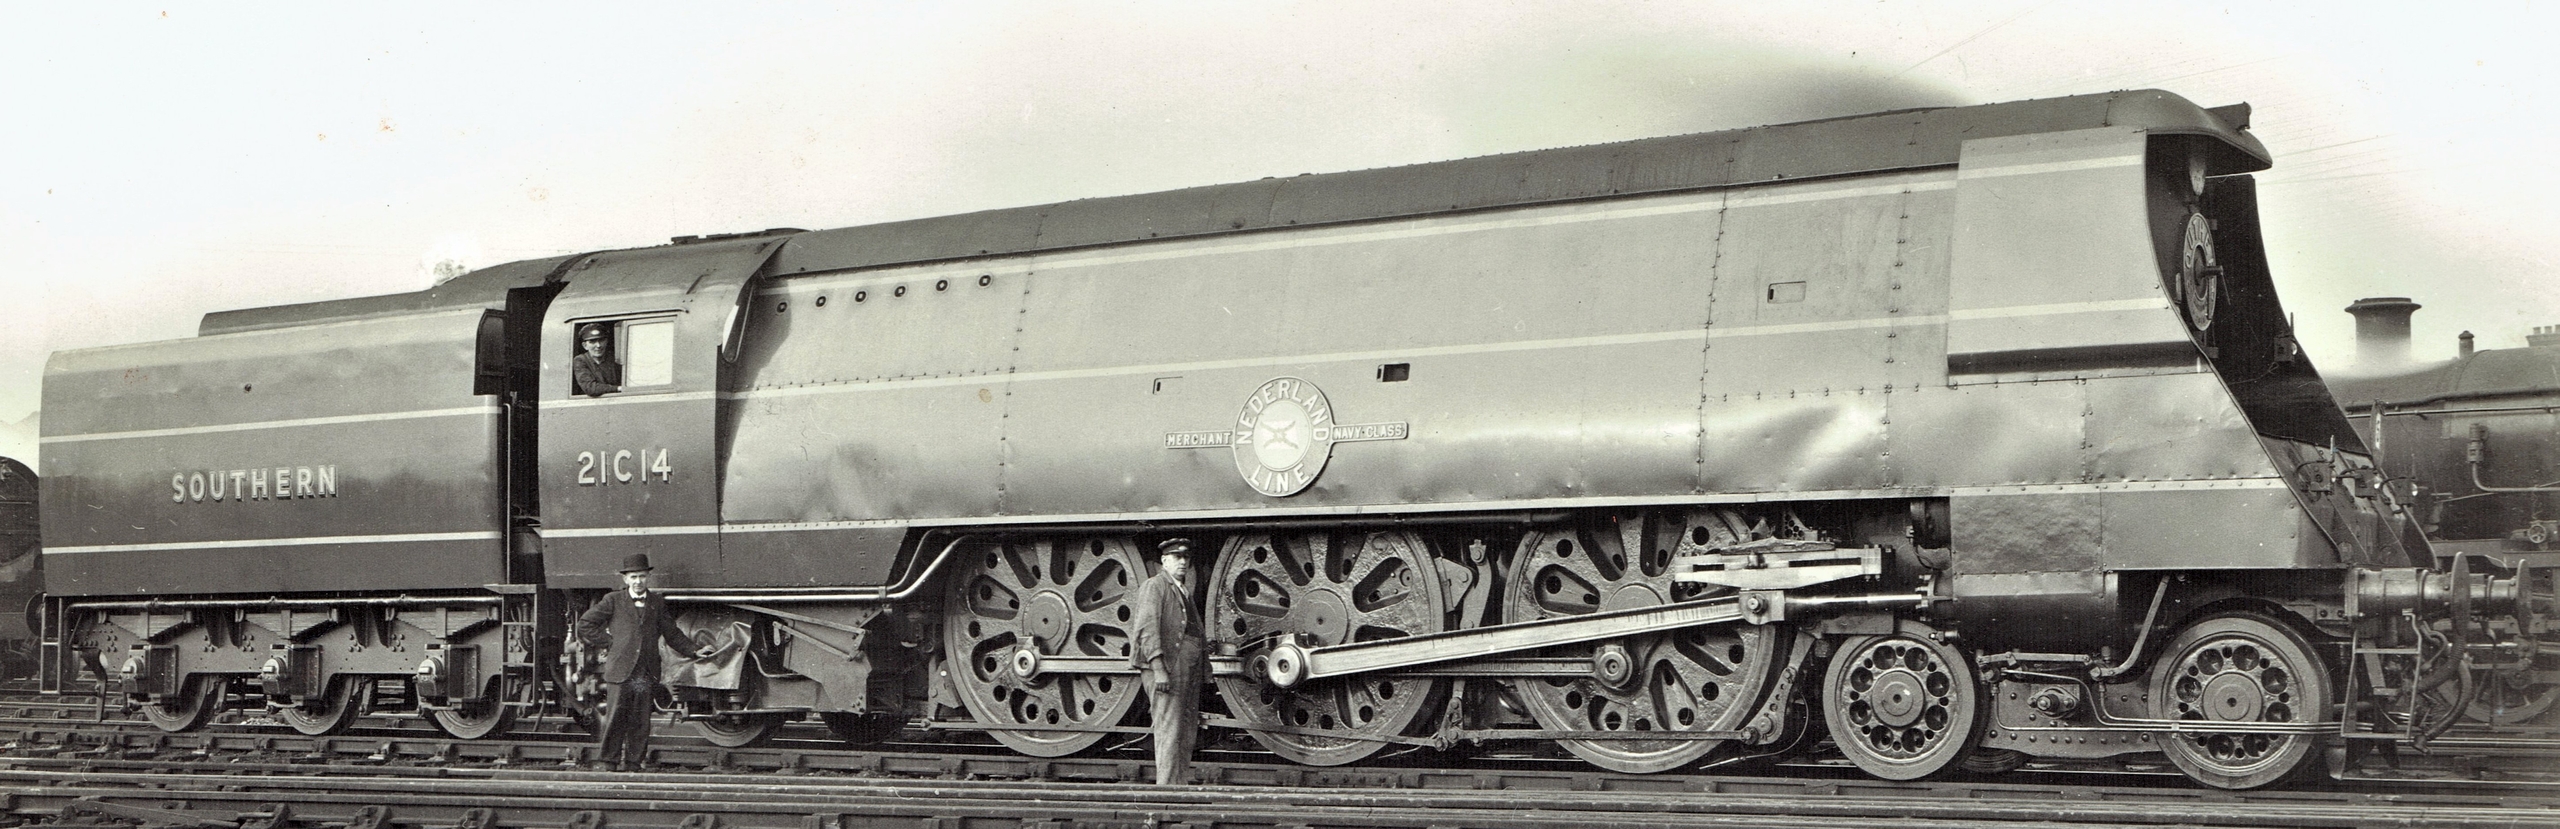 No. 21C14 “Nederland Line” in November 1945 at Salisbury